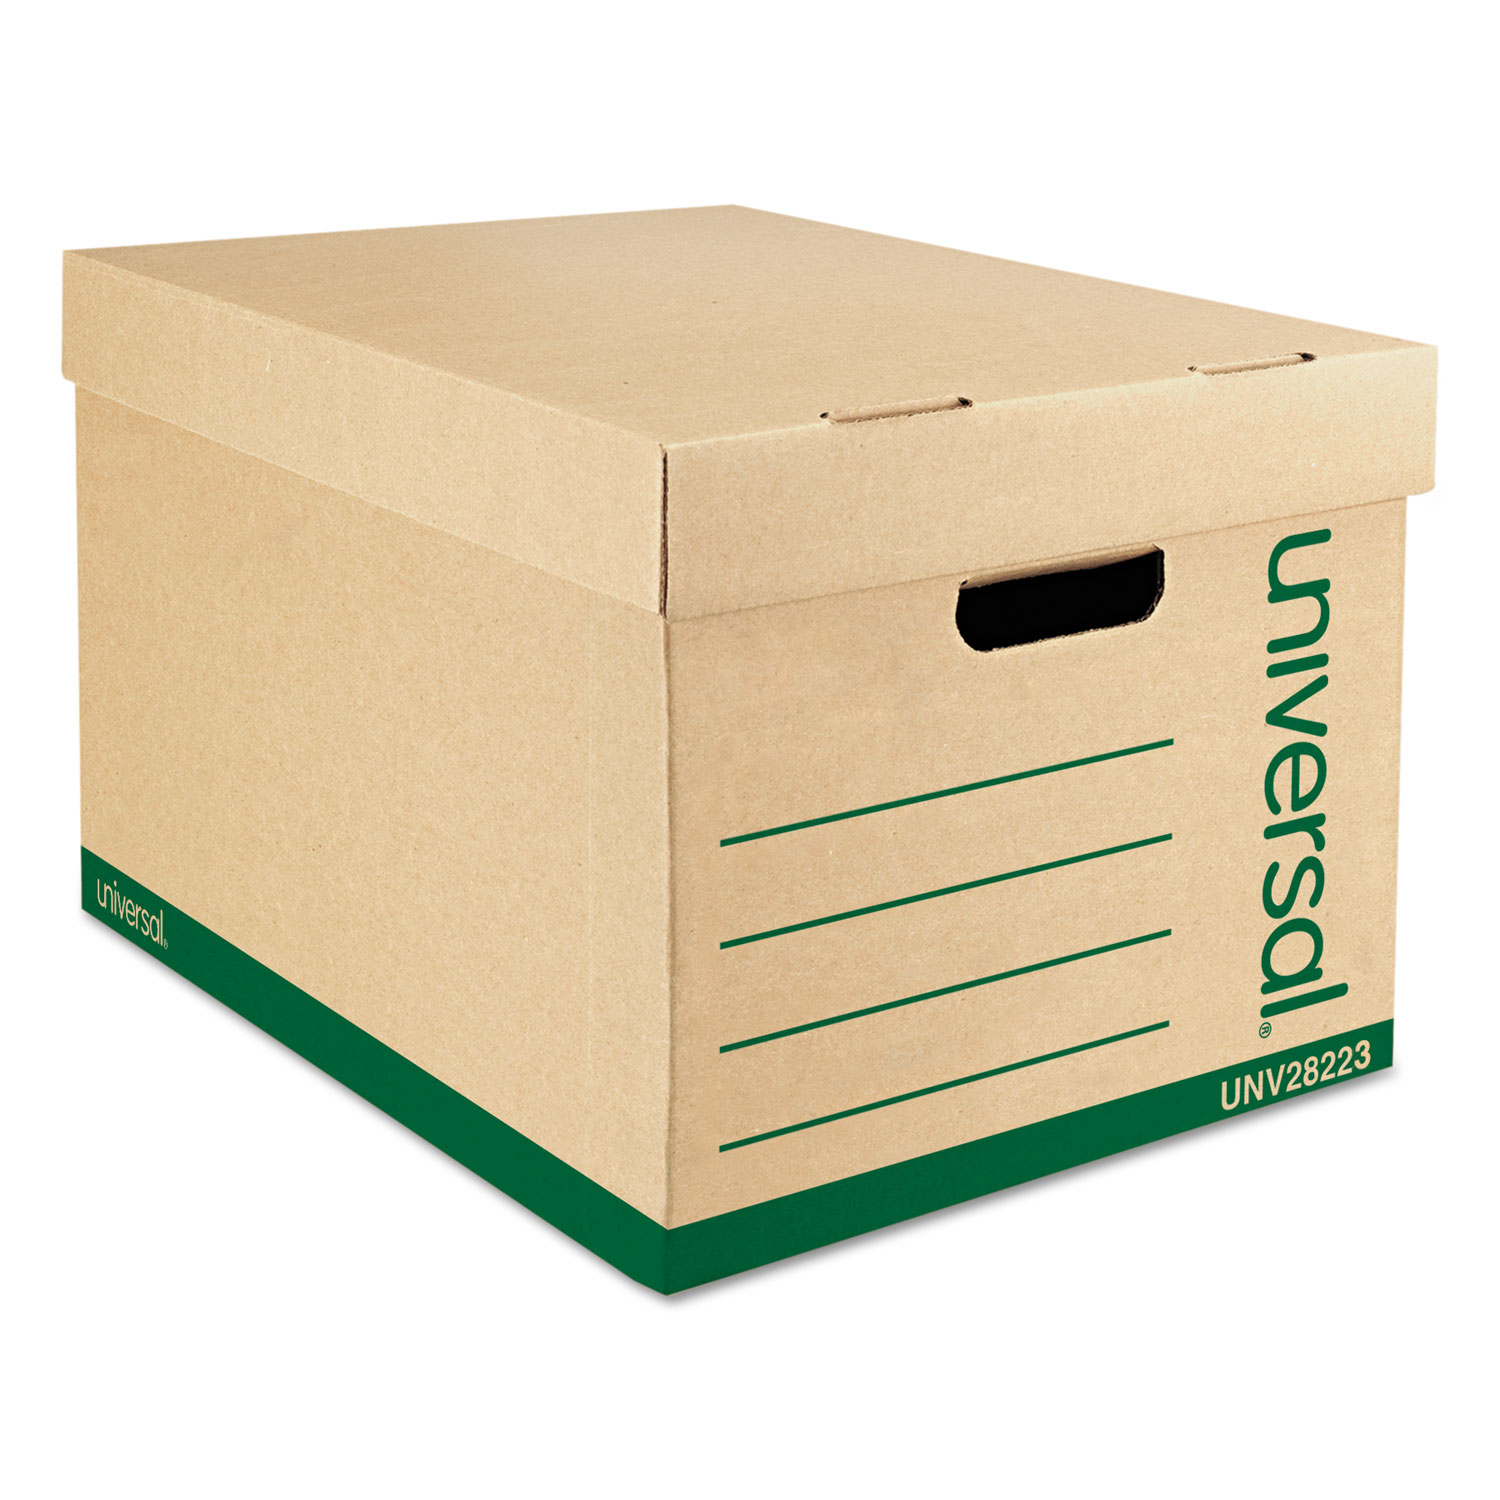  Universal 9523101 Recycled Medium-Duty Record Storage Box, Letter/Legal Files, Kraft/Green, 12/Carton (UNV28223) 